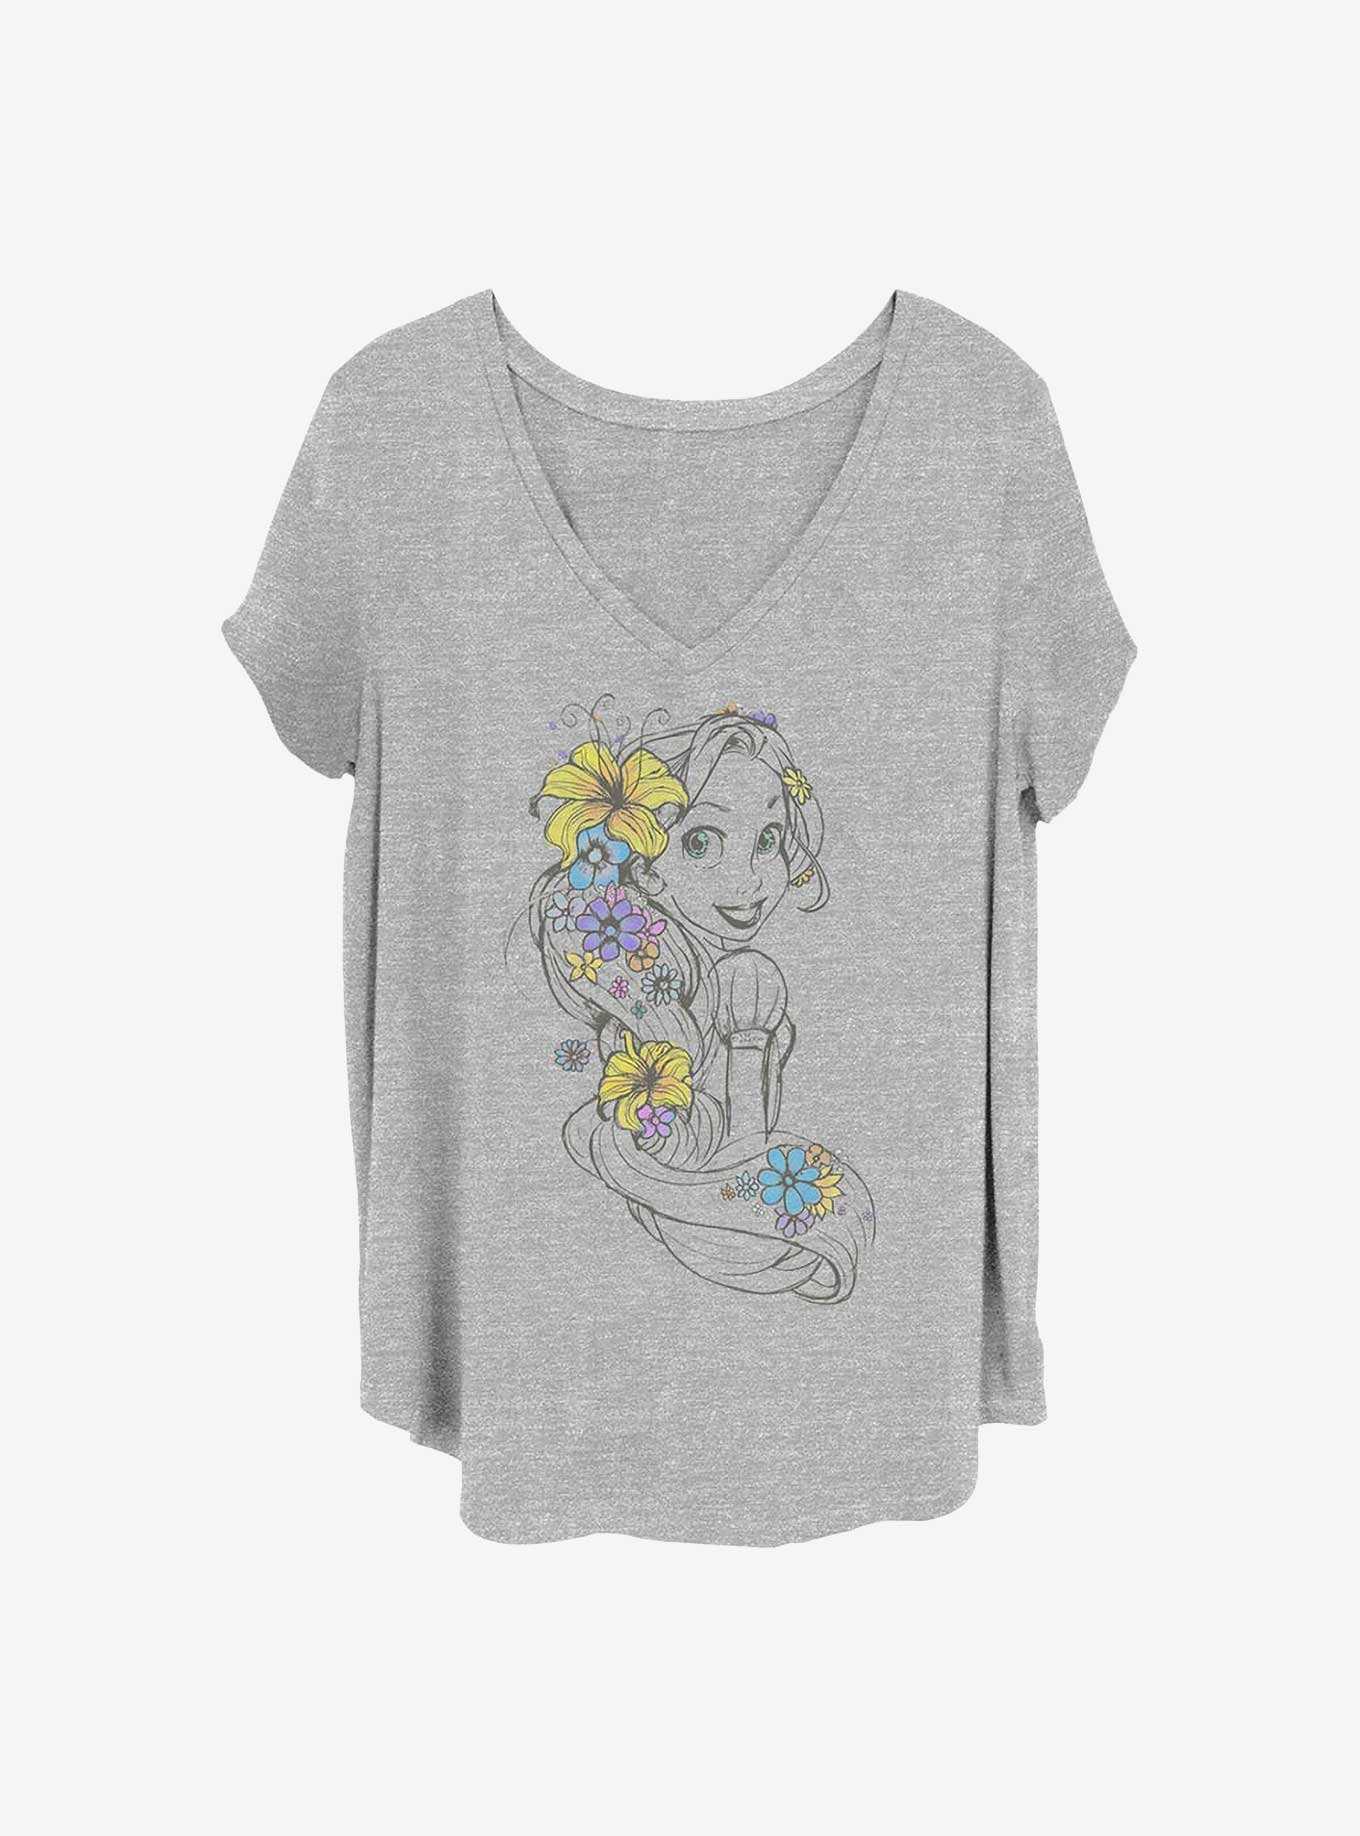 Disney Tangled Rapunzel Sketch Girls T-Shirt Plus Size, , hi-res